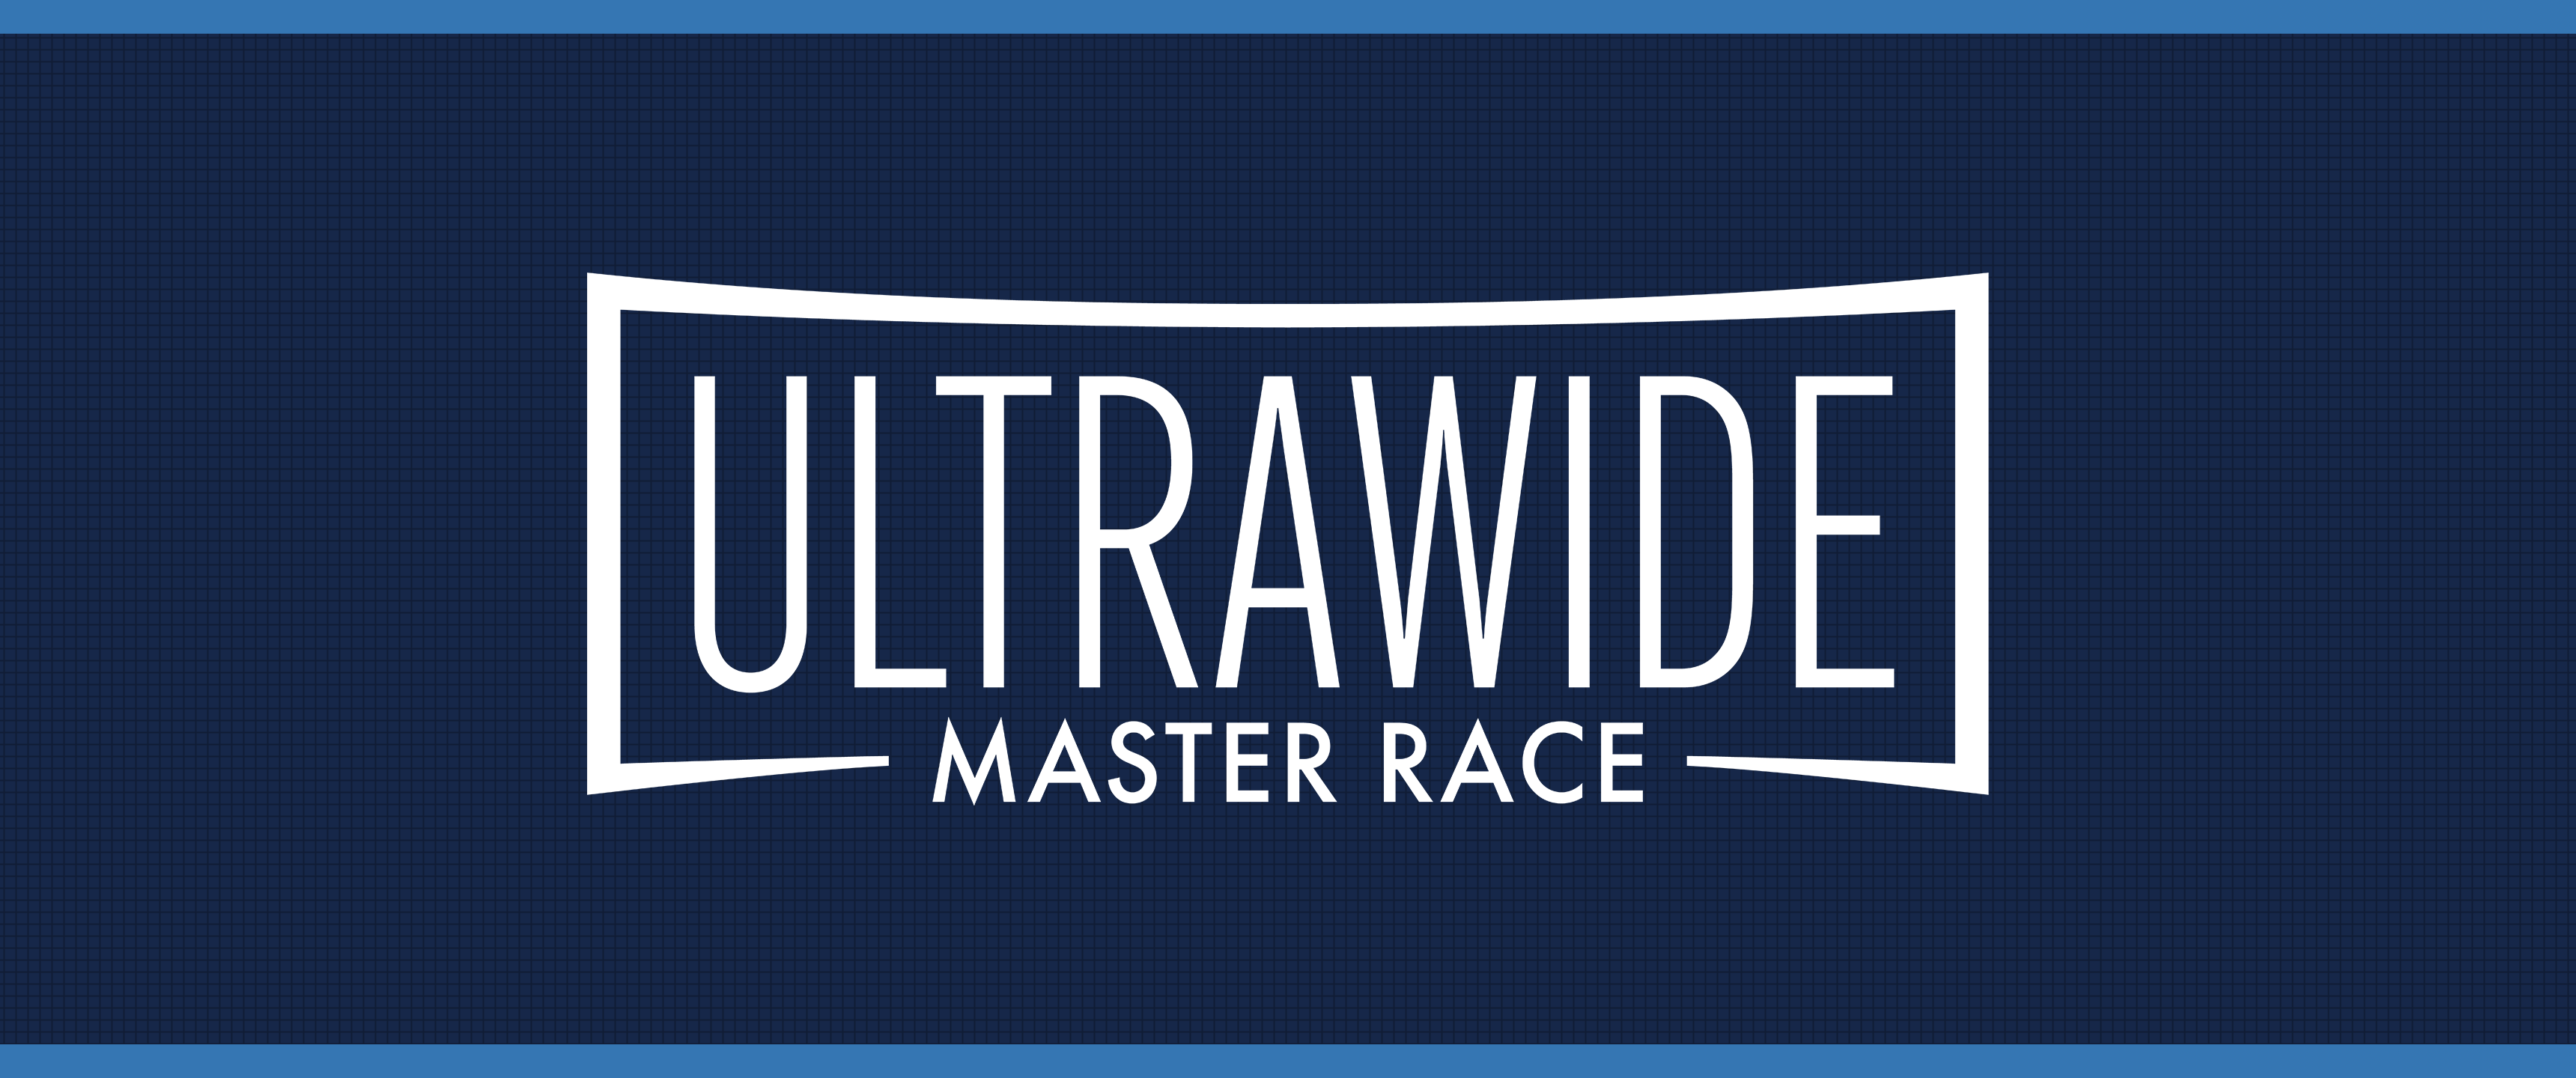 Ultrawide Master Race Blue 3440x1440